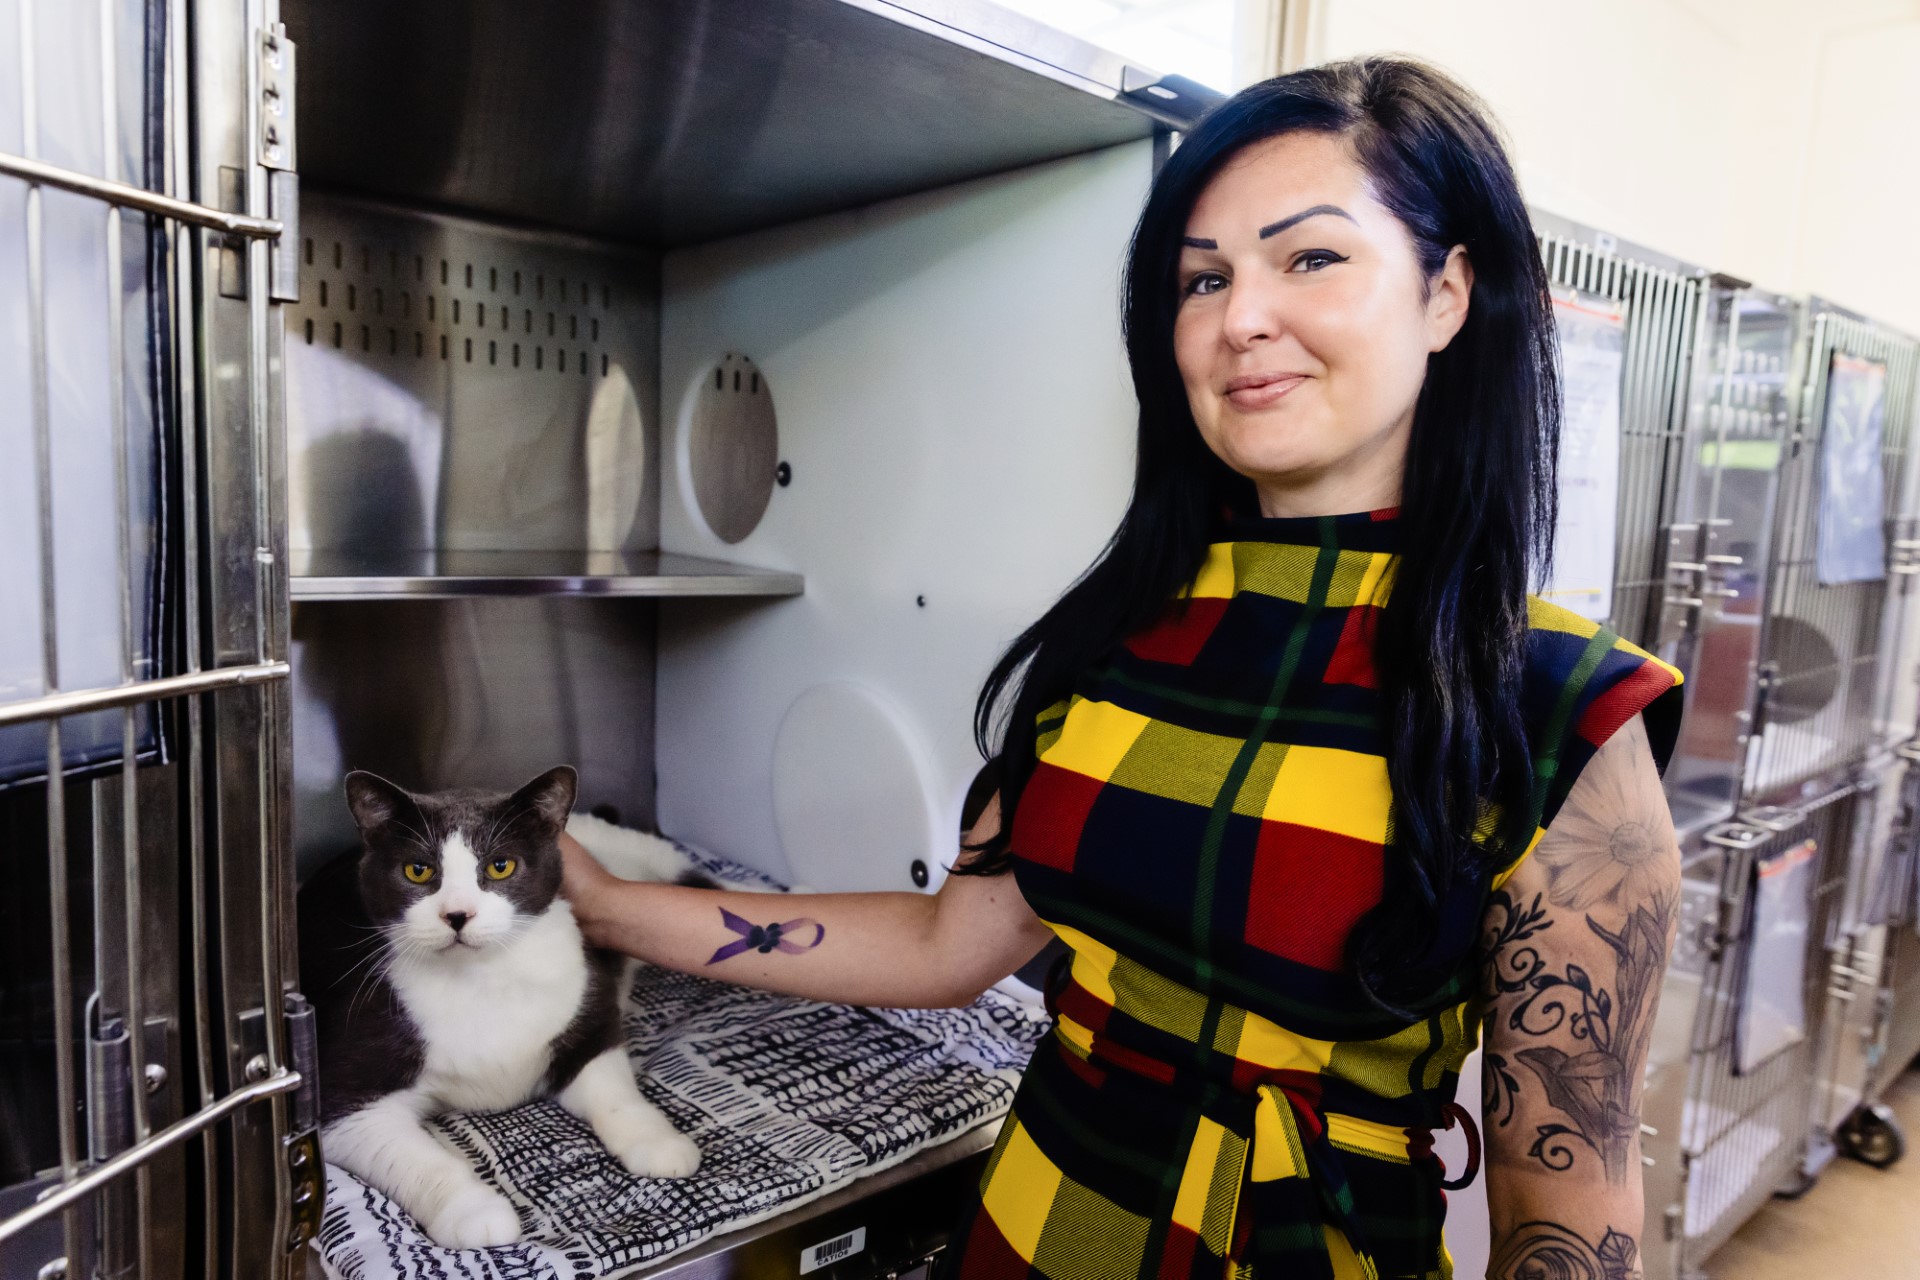 Owner of Feline Logic caring for cat in kennels